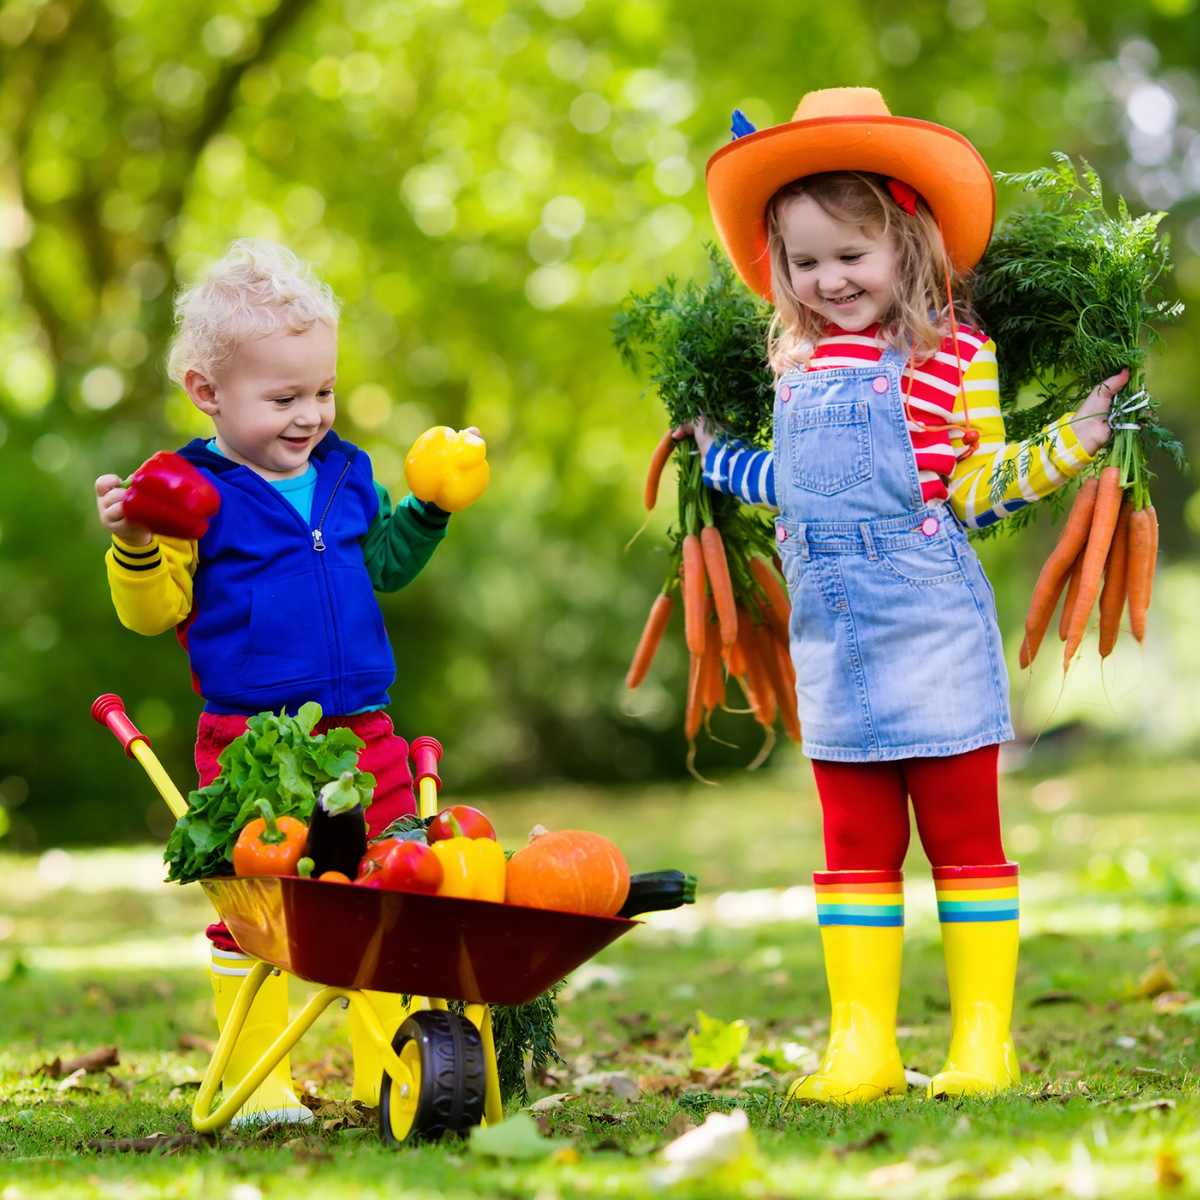 5 Ways to Keep Kids Active in the Garden